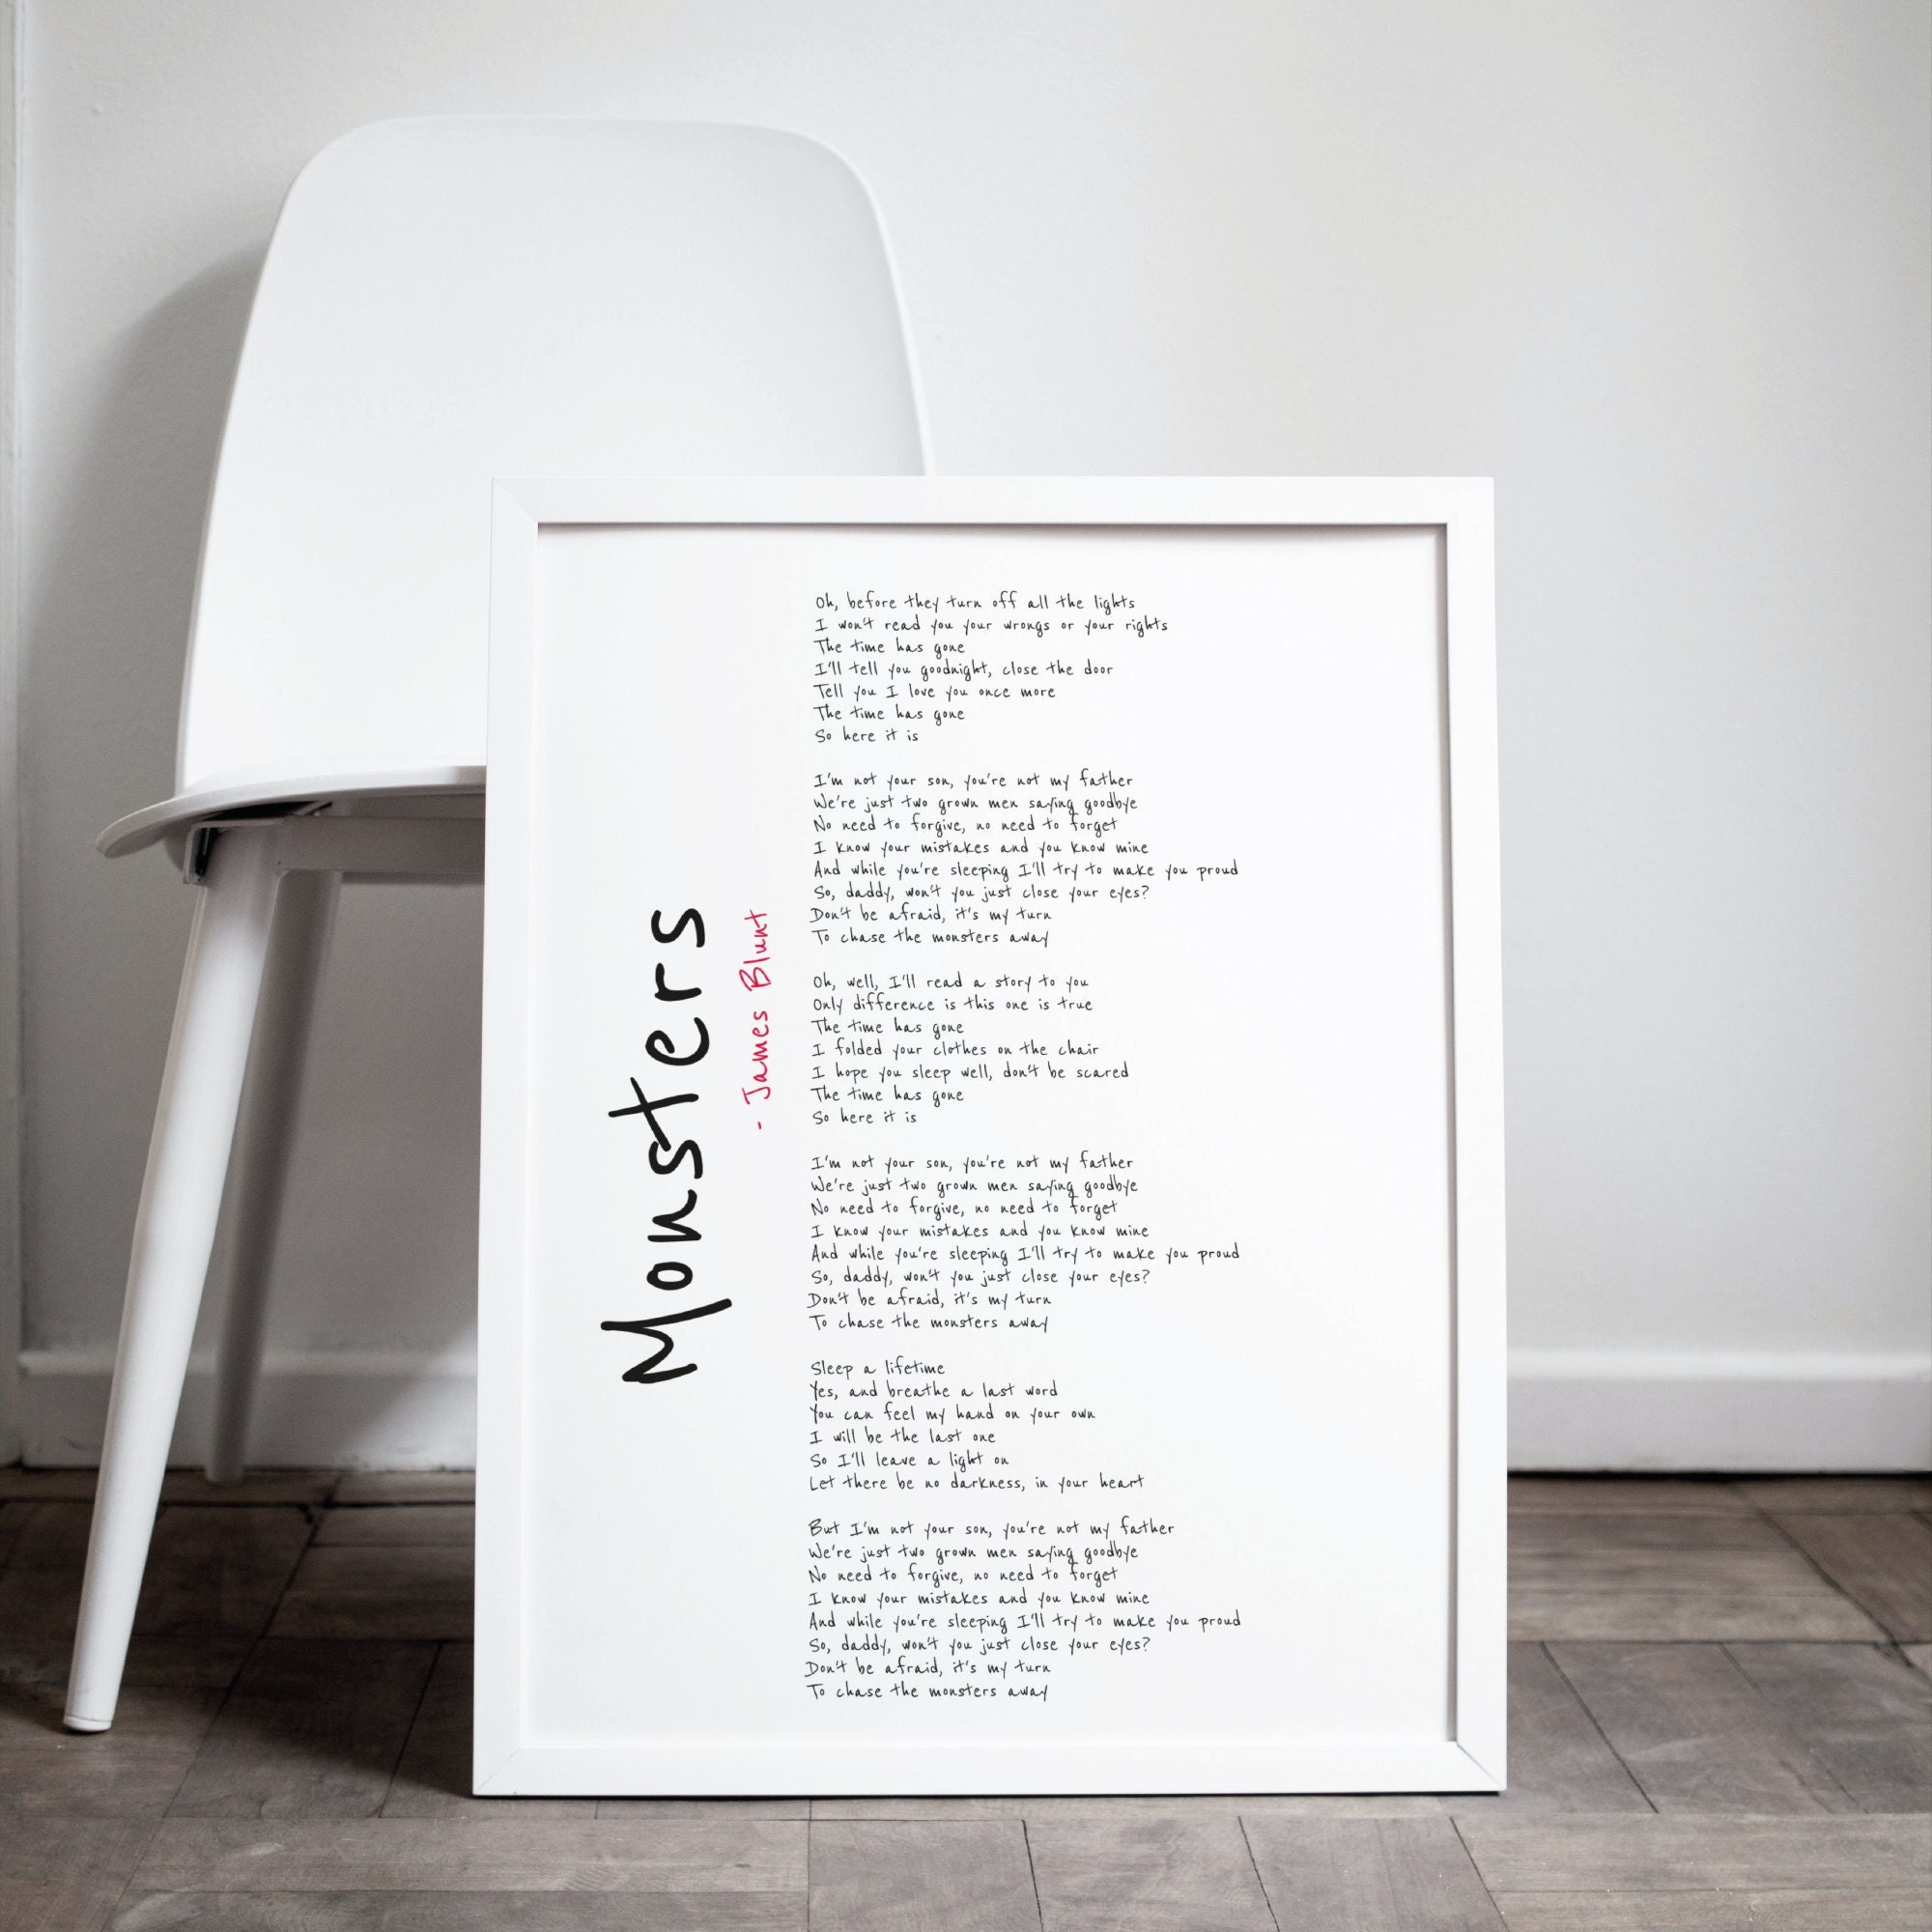 James Blunt Monsters Grey Rustic Script Song Lyric Wall Art Print - Red  Heart Print